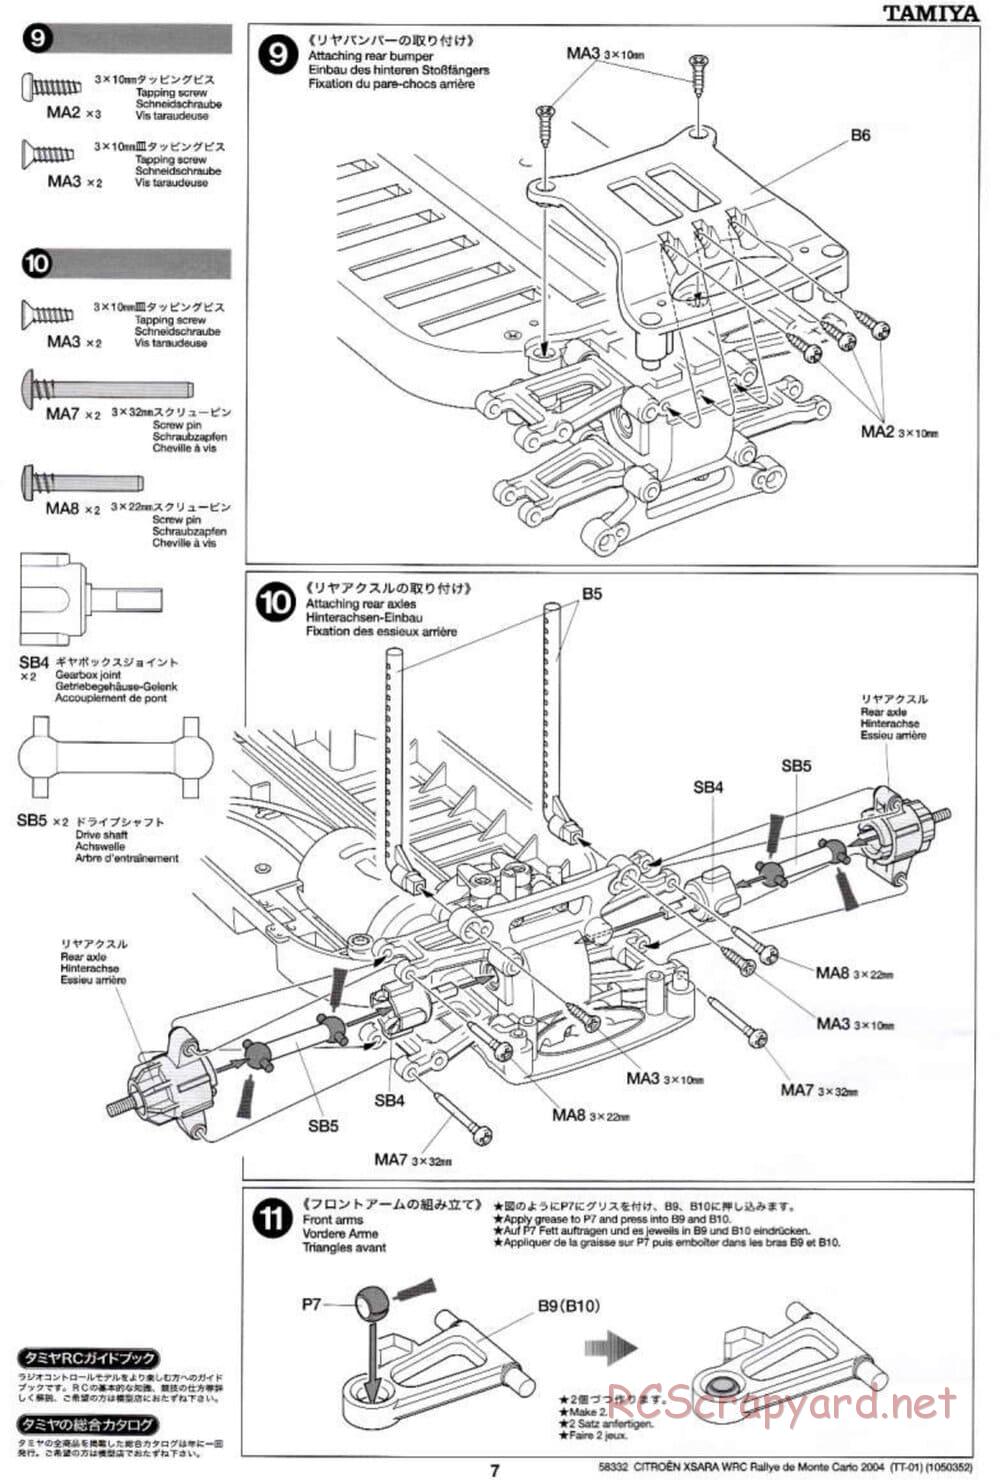 Tamiya - Citroen Xsara WRC Rallye De Monte Carlo 2004 - TT-01 Chassis - Manual - Page 7